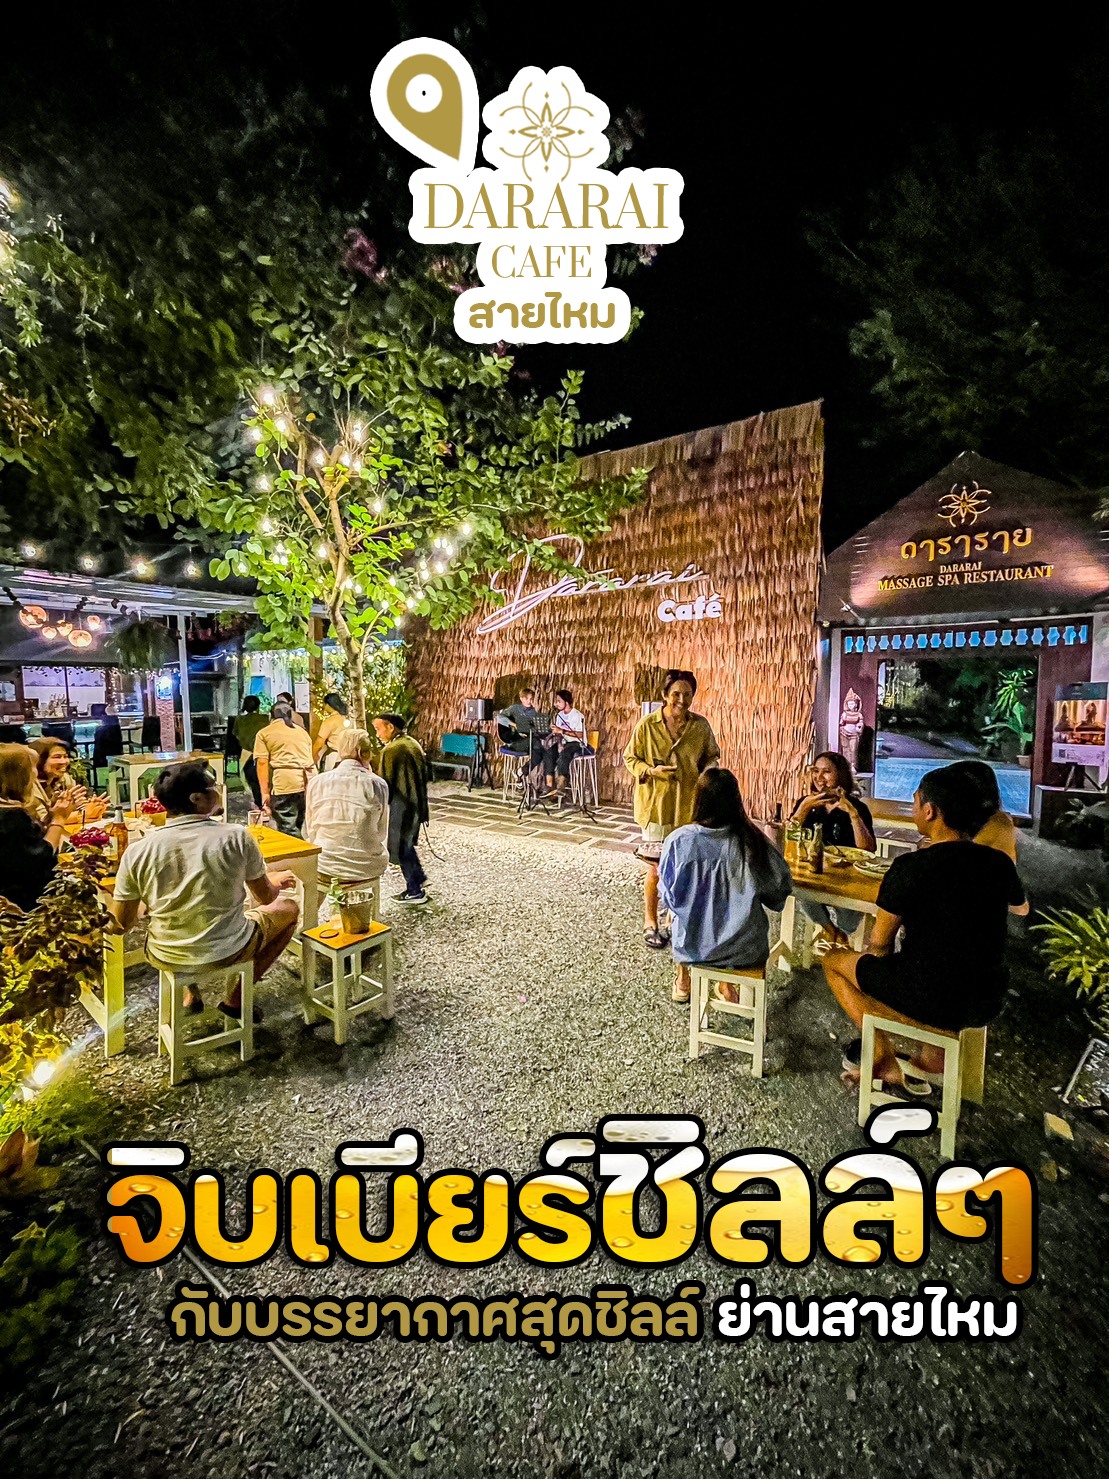 Dararai Café (Dararai Café) : กรุงเทพมหานคร (Bangkok)